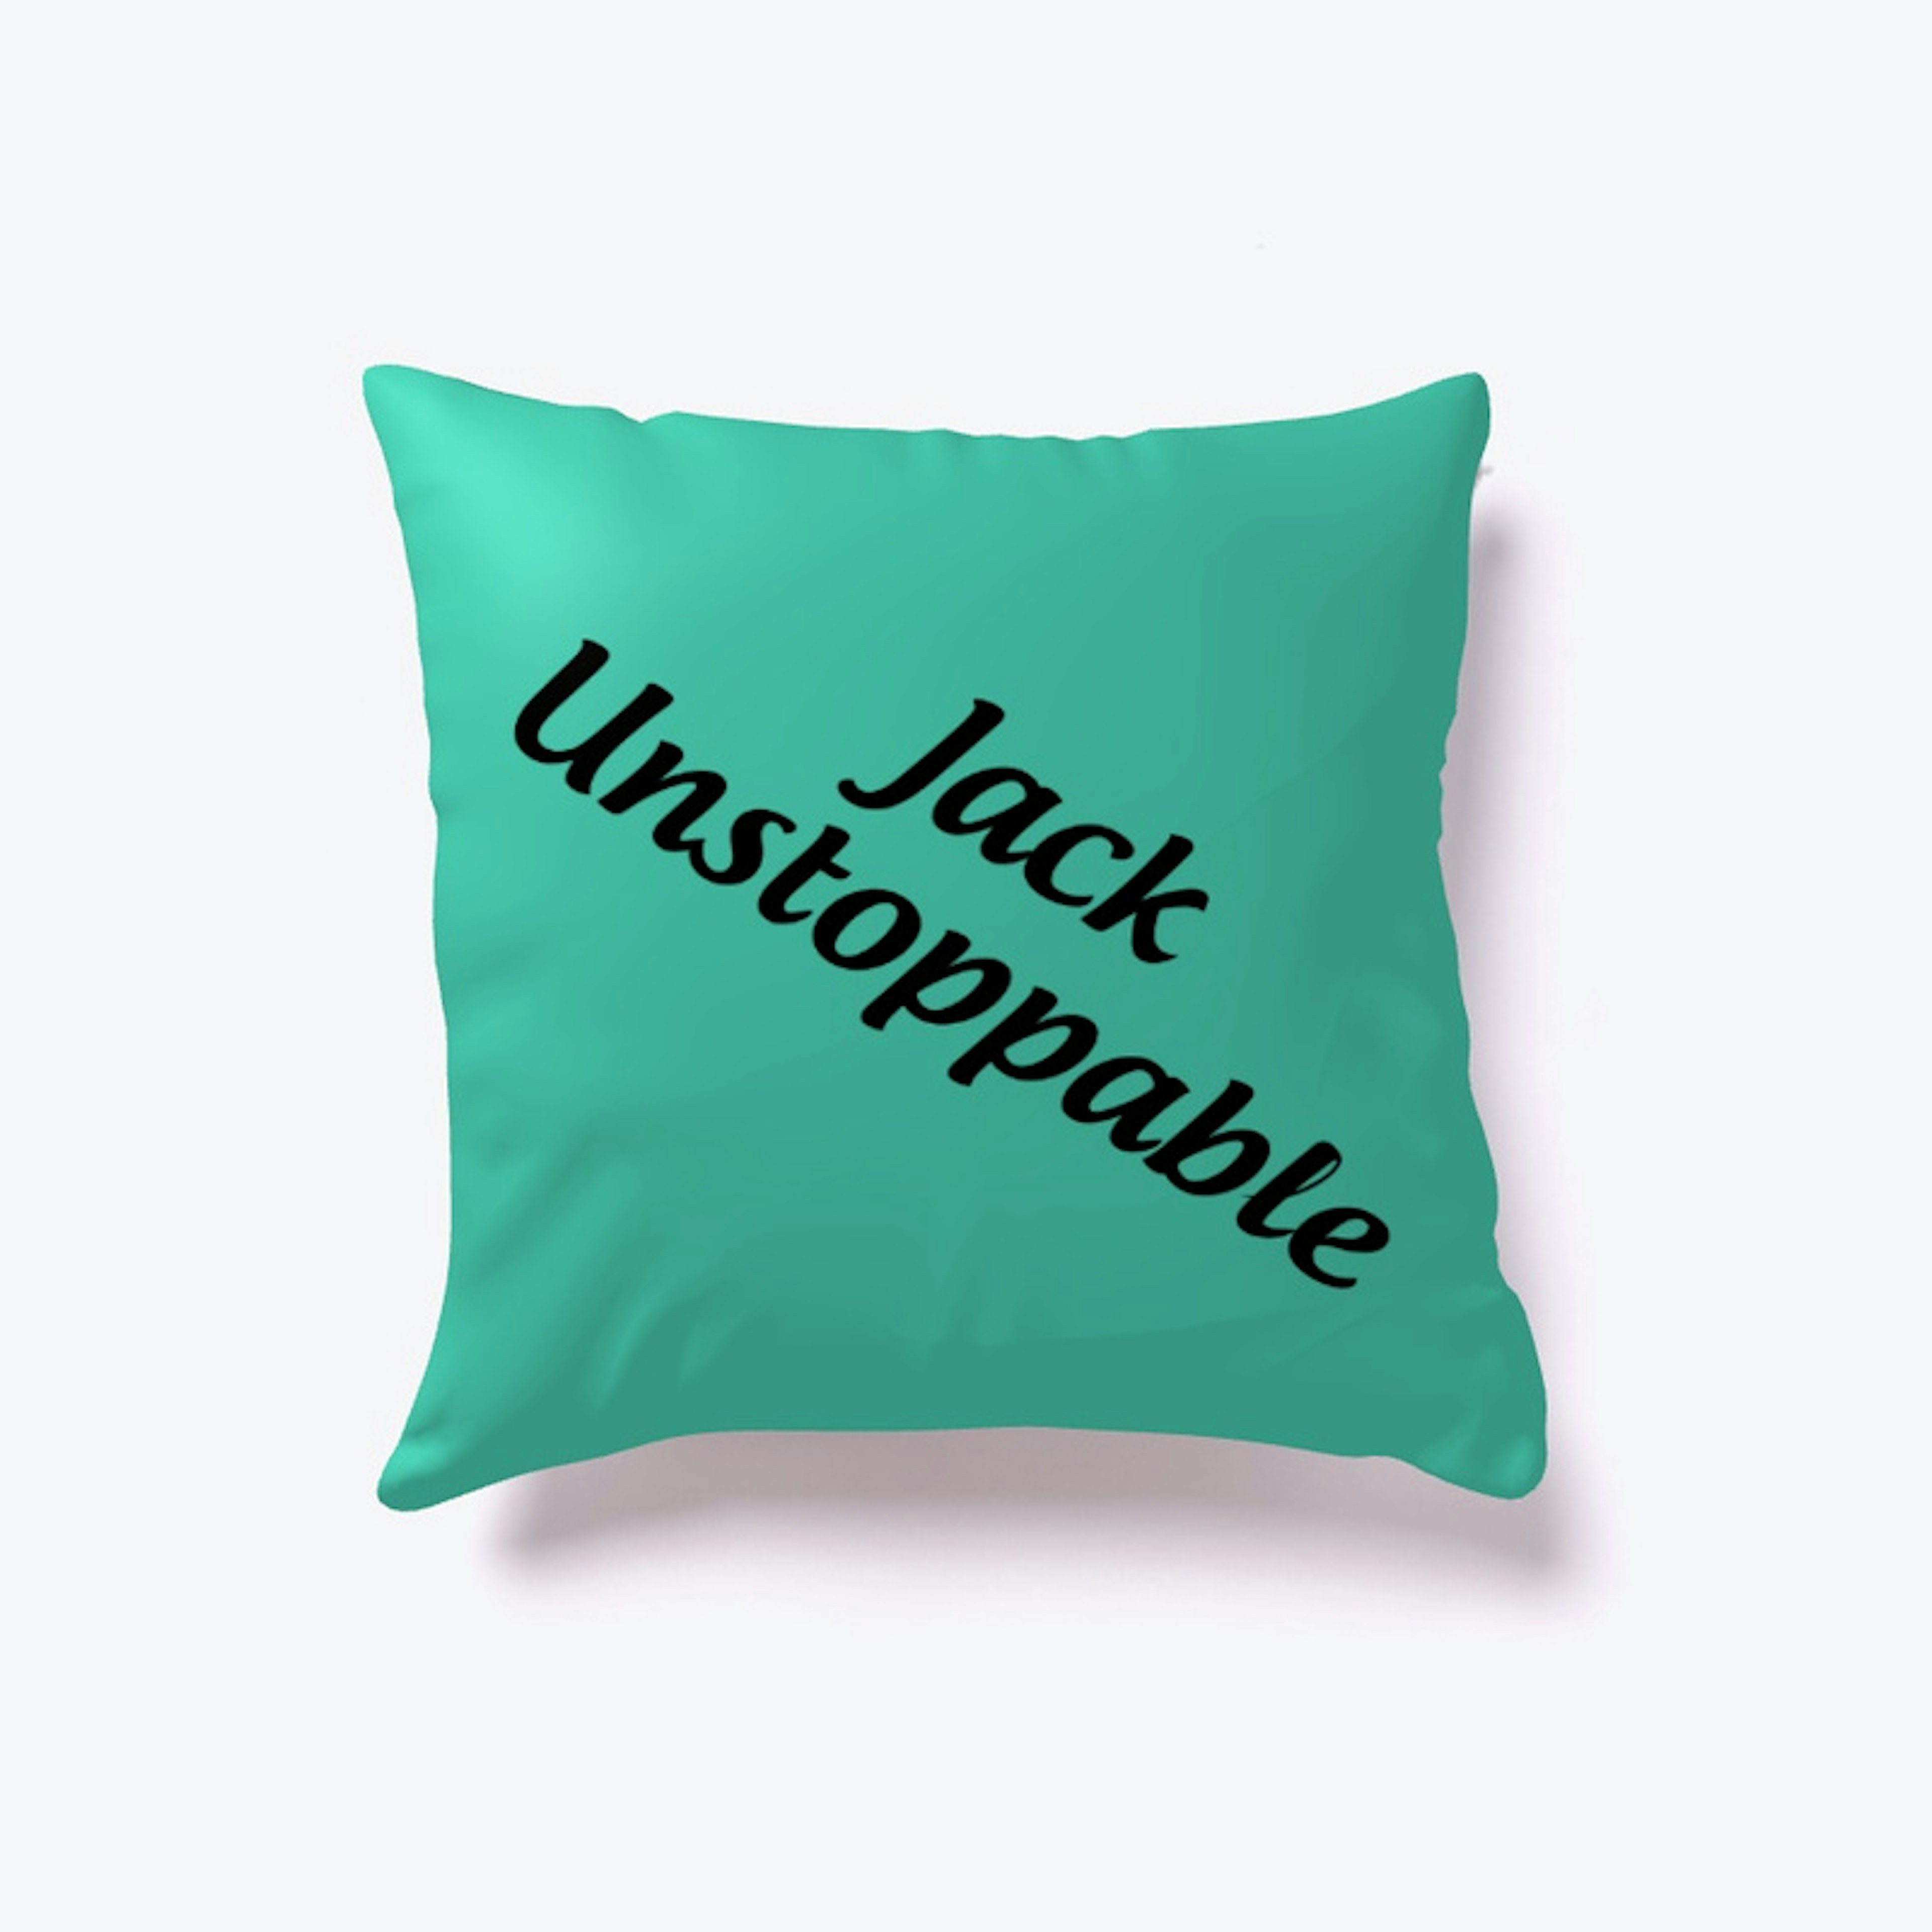 Jack Unstoppable